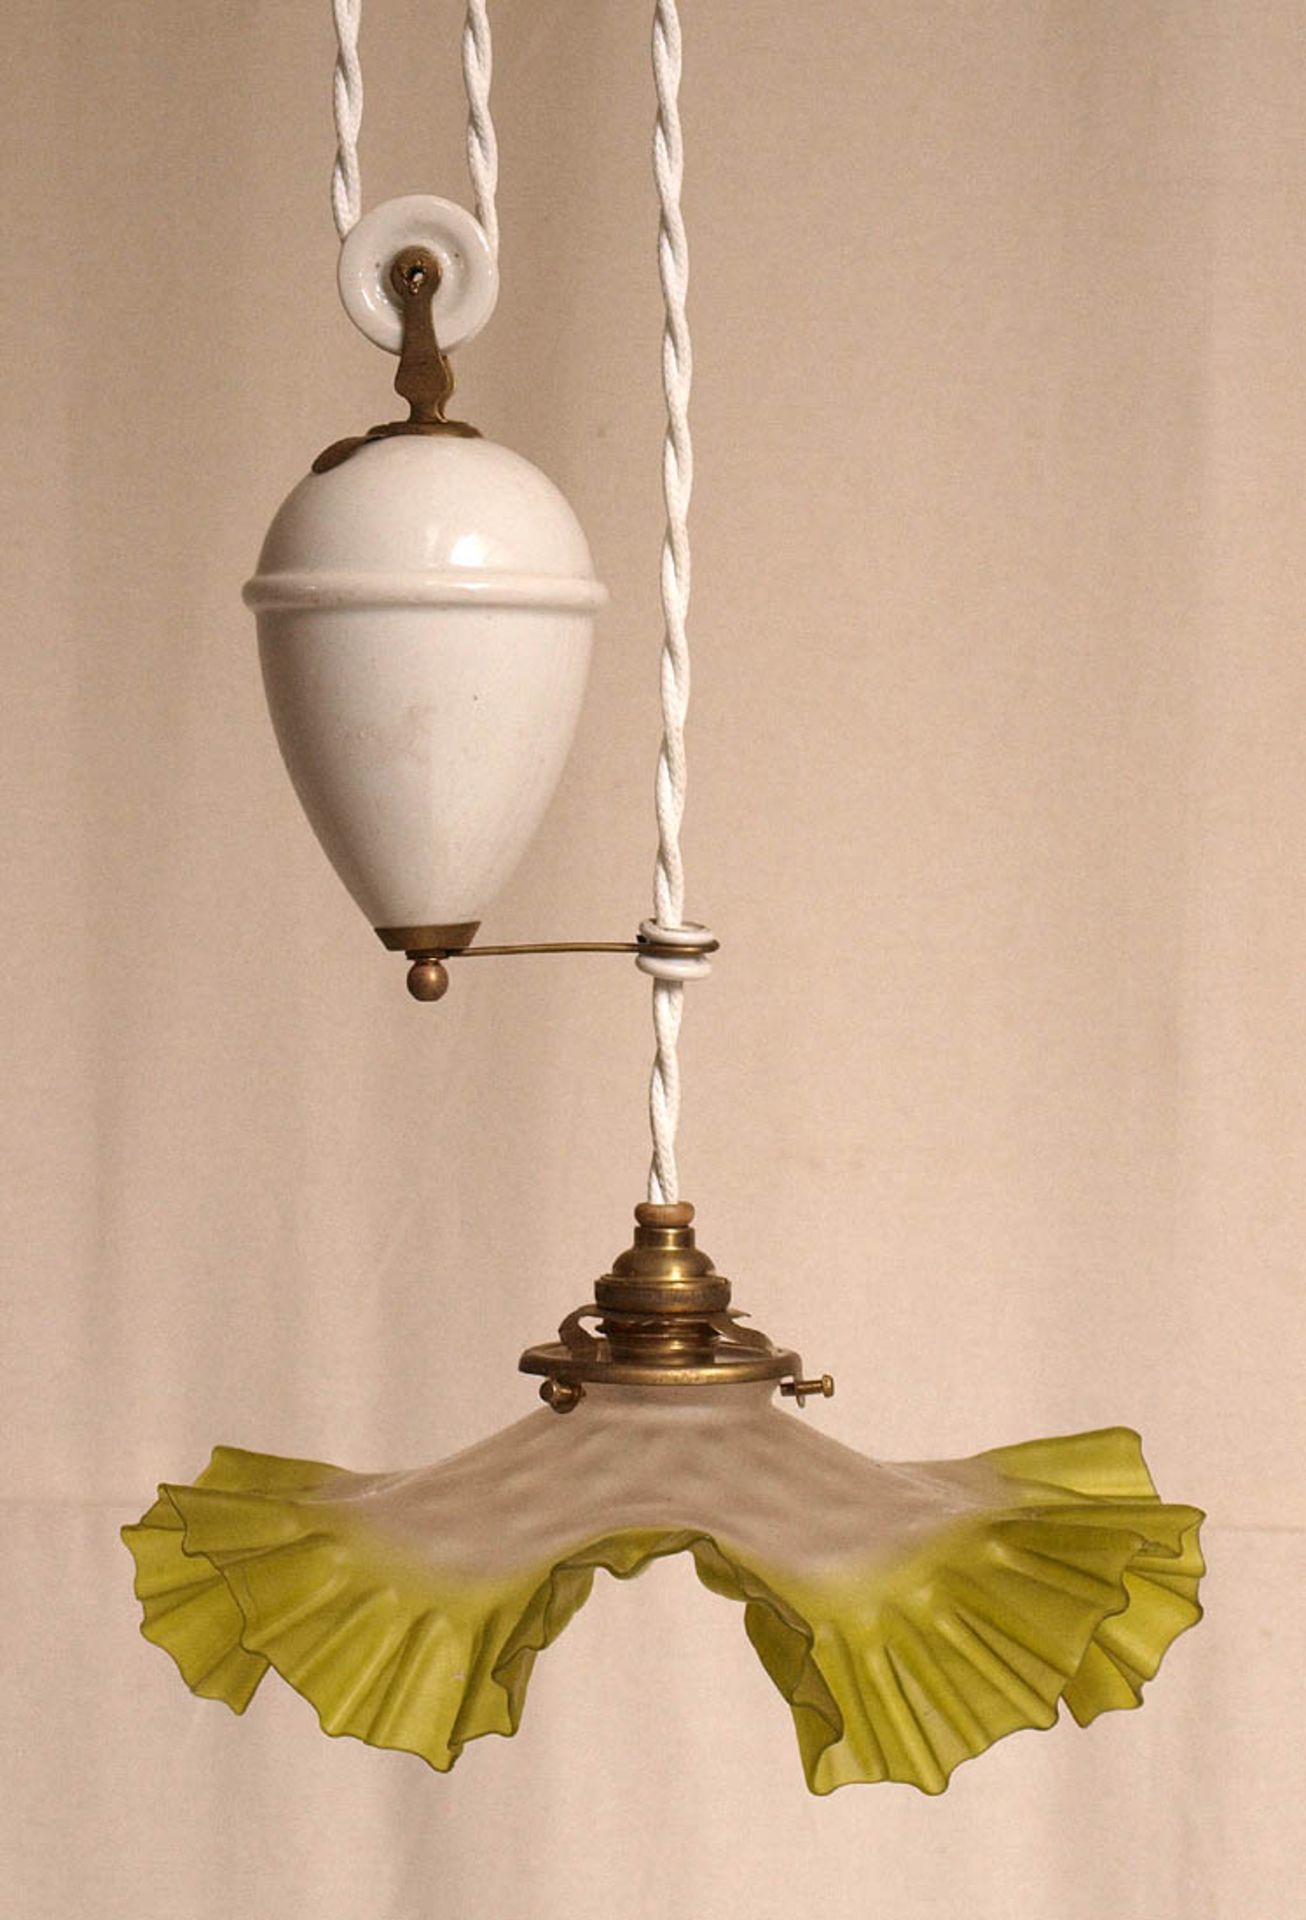 Deckenzuglampe, um 1900Mattierter Glasschirm mit gezacktem, mattgrünem Rand, Zugmechanismus aus